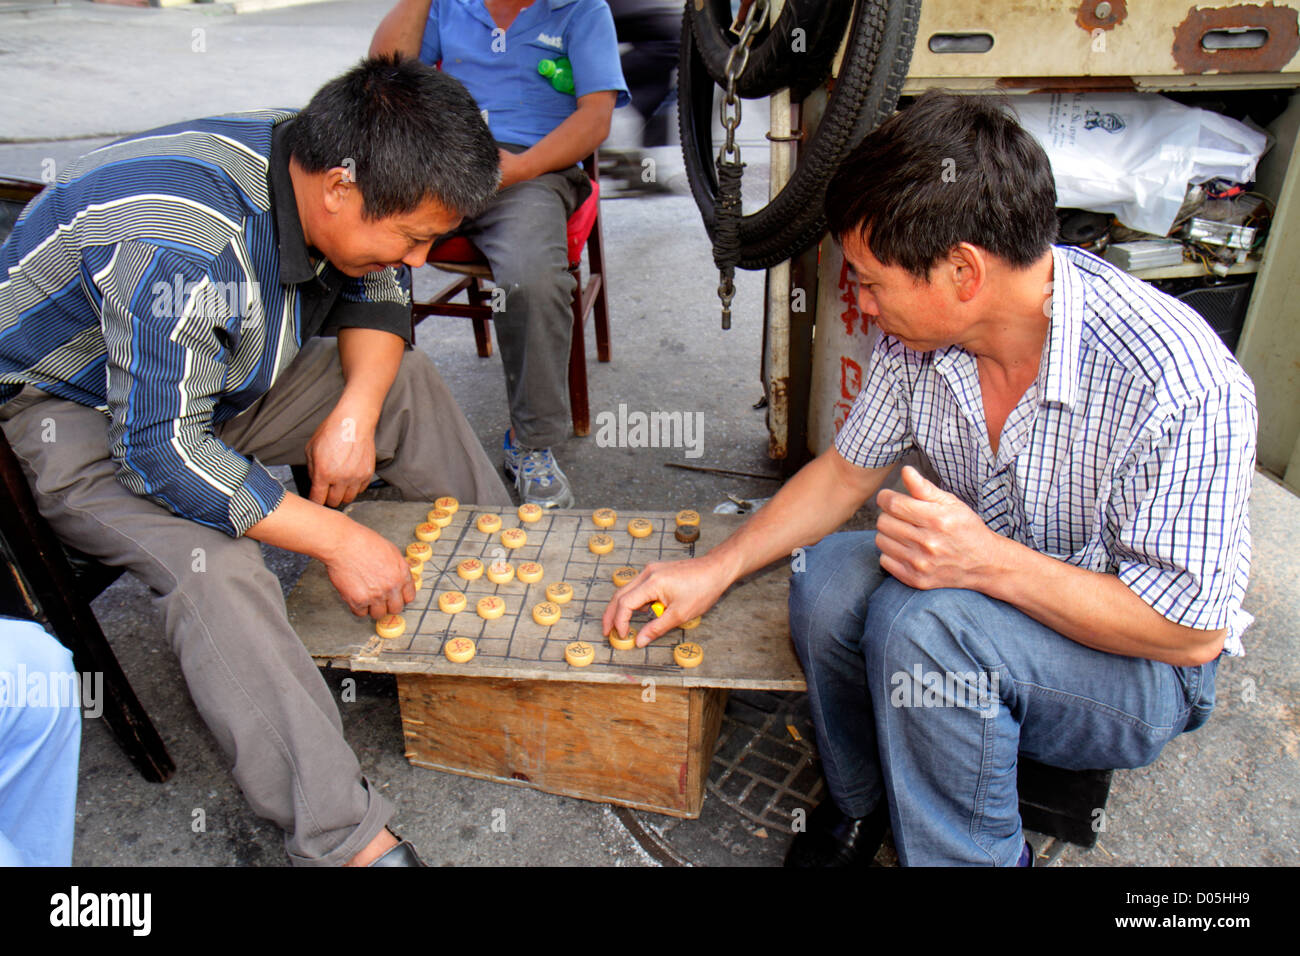 Shanghai China,Chinese Huangpu District,Sichuan Road,Asian man men male adult adults,playing board game,Xiangqi,Chinese Chess,street scene,China121003 Stock Photo